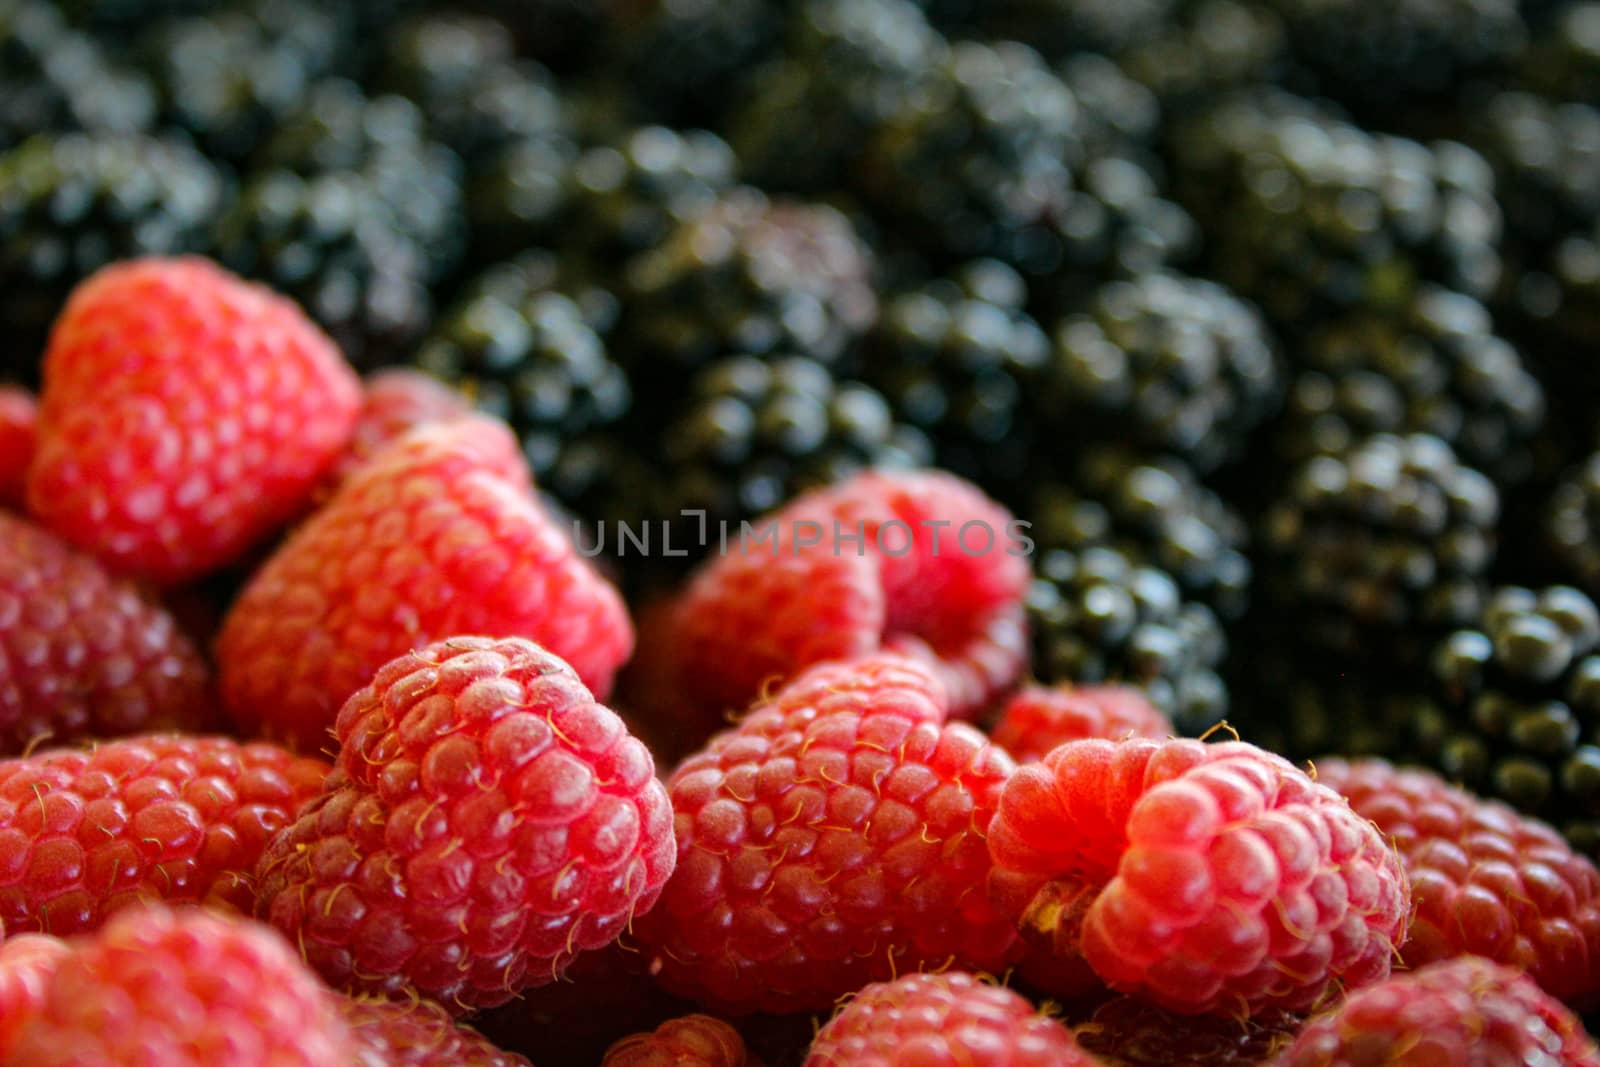 Close up of raspberries and blurred blackberries in the background. Zavidovici, Bosnia and Herzegovina.